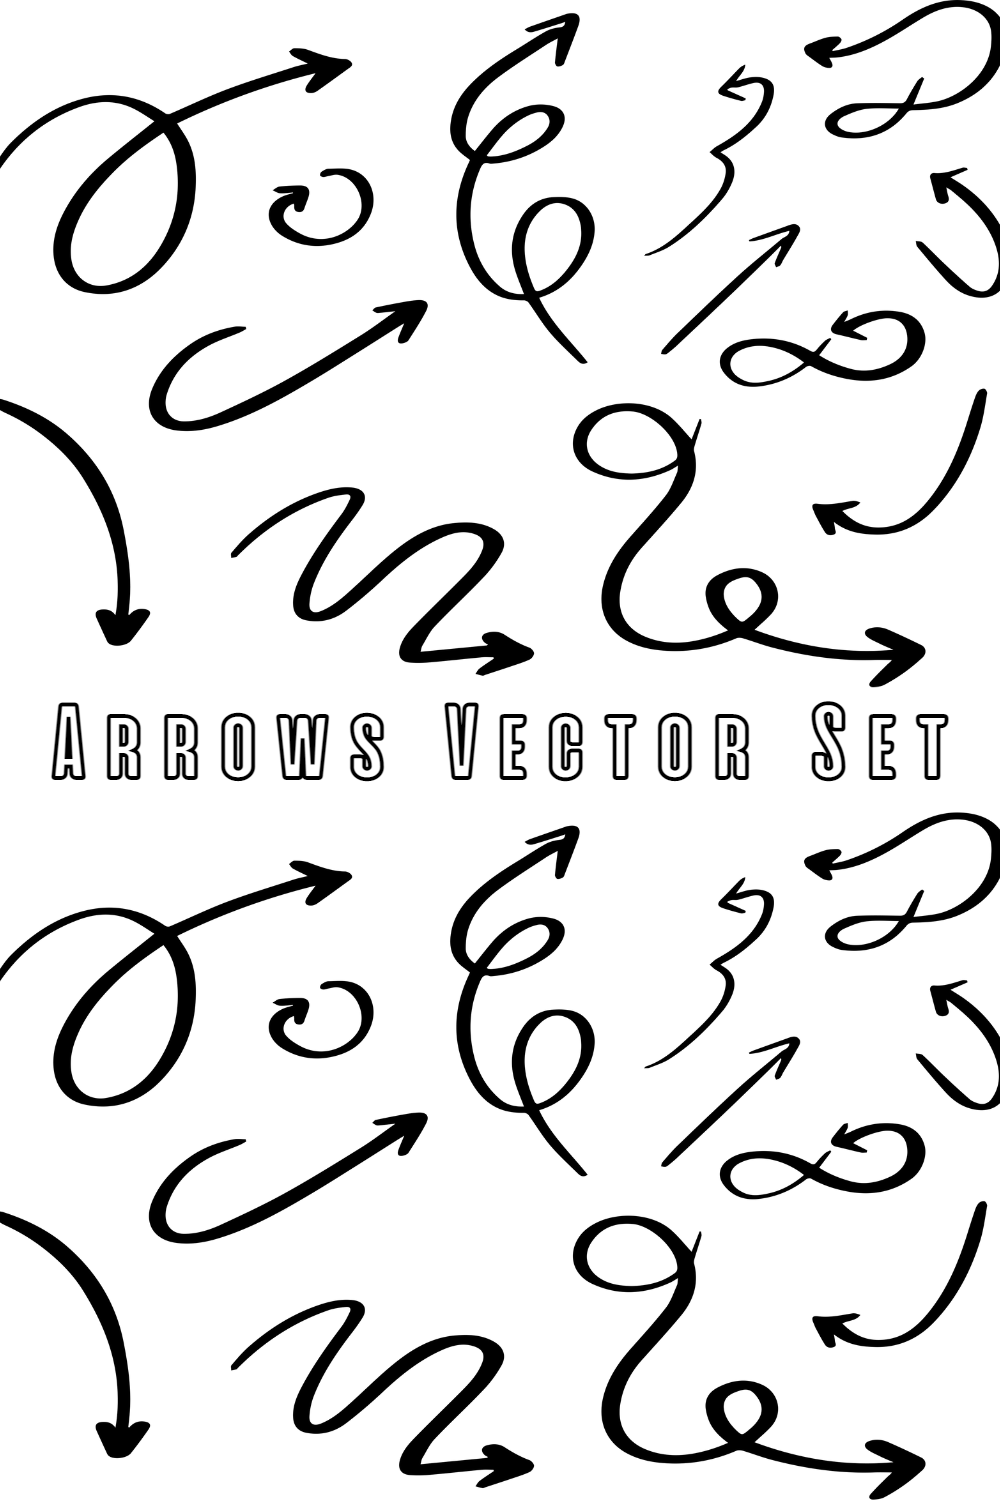 Black Curved Vector Arrows Set pinterest preview image.